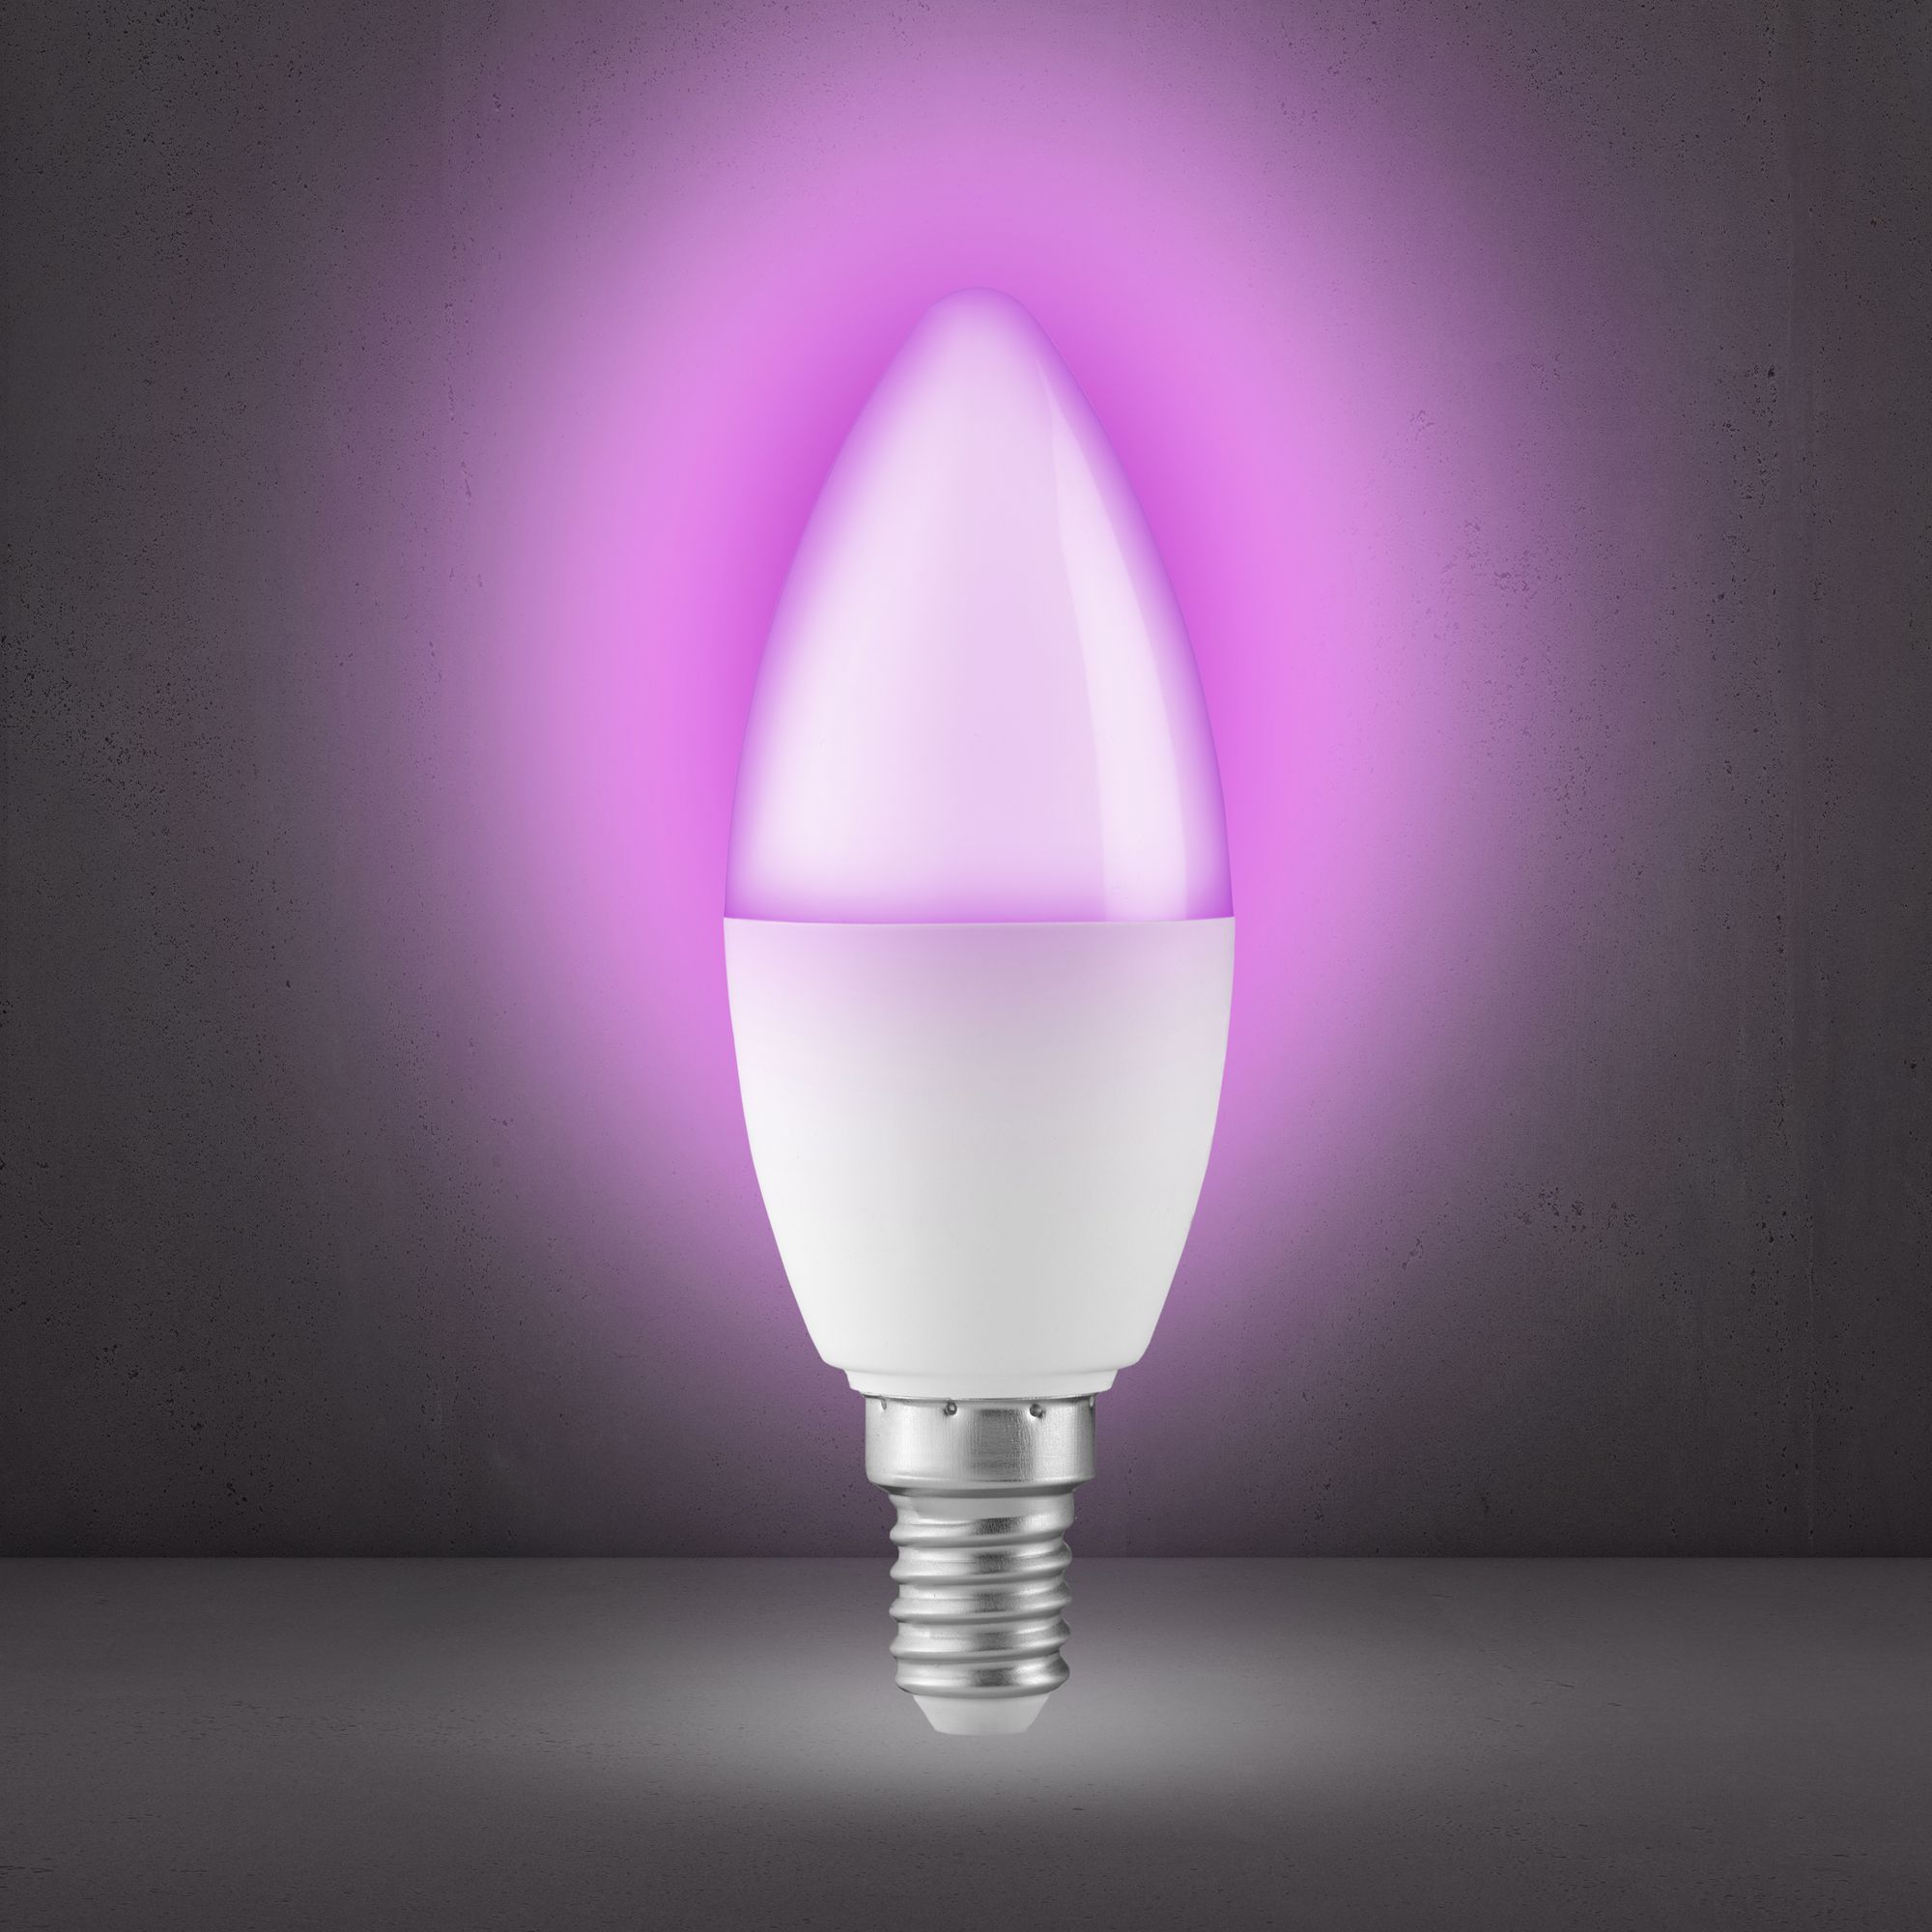 ALECTO smarte,mehrfarbige WLAN-LED-Glühlampe E14-Sockel RGB SMARTLIGHT30 - mit